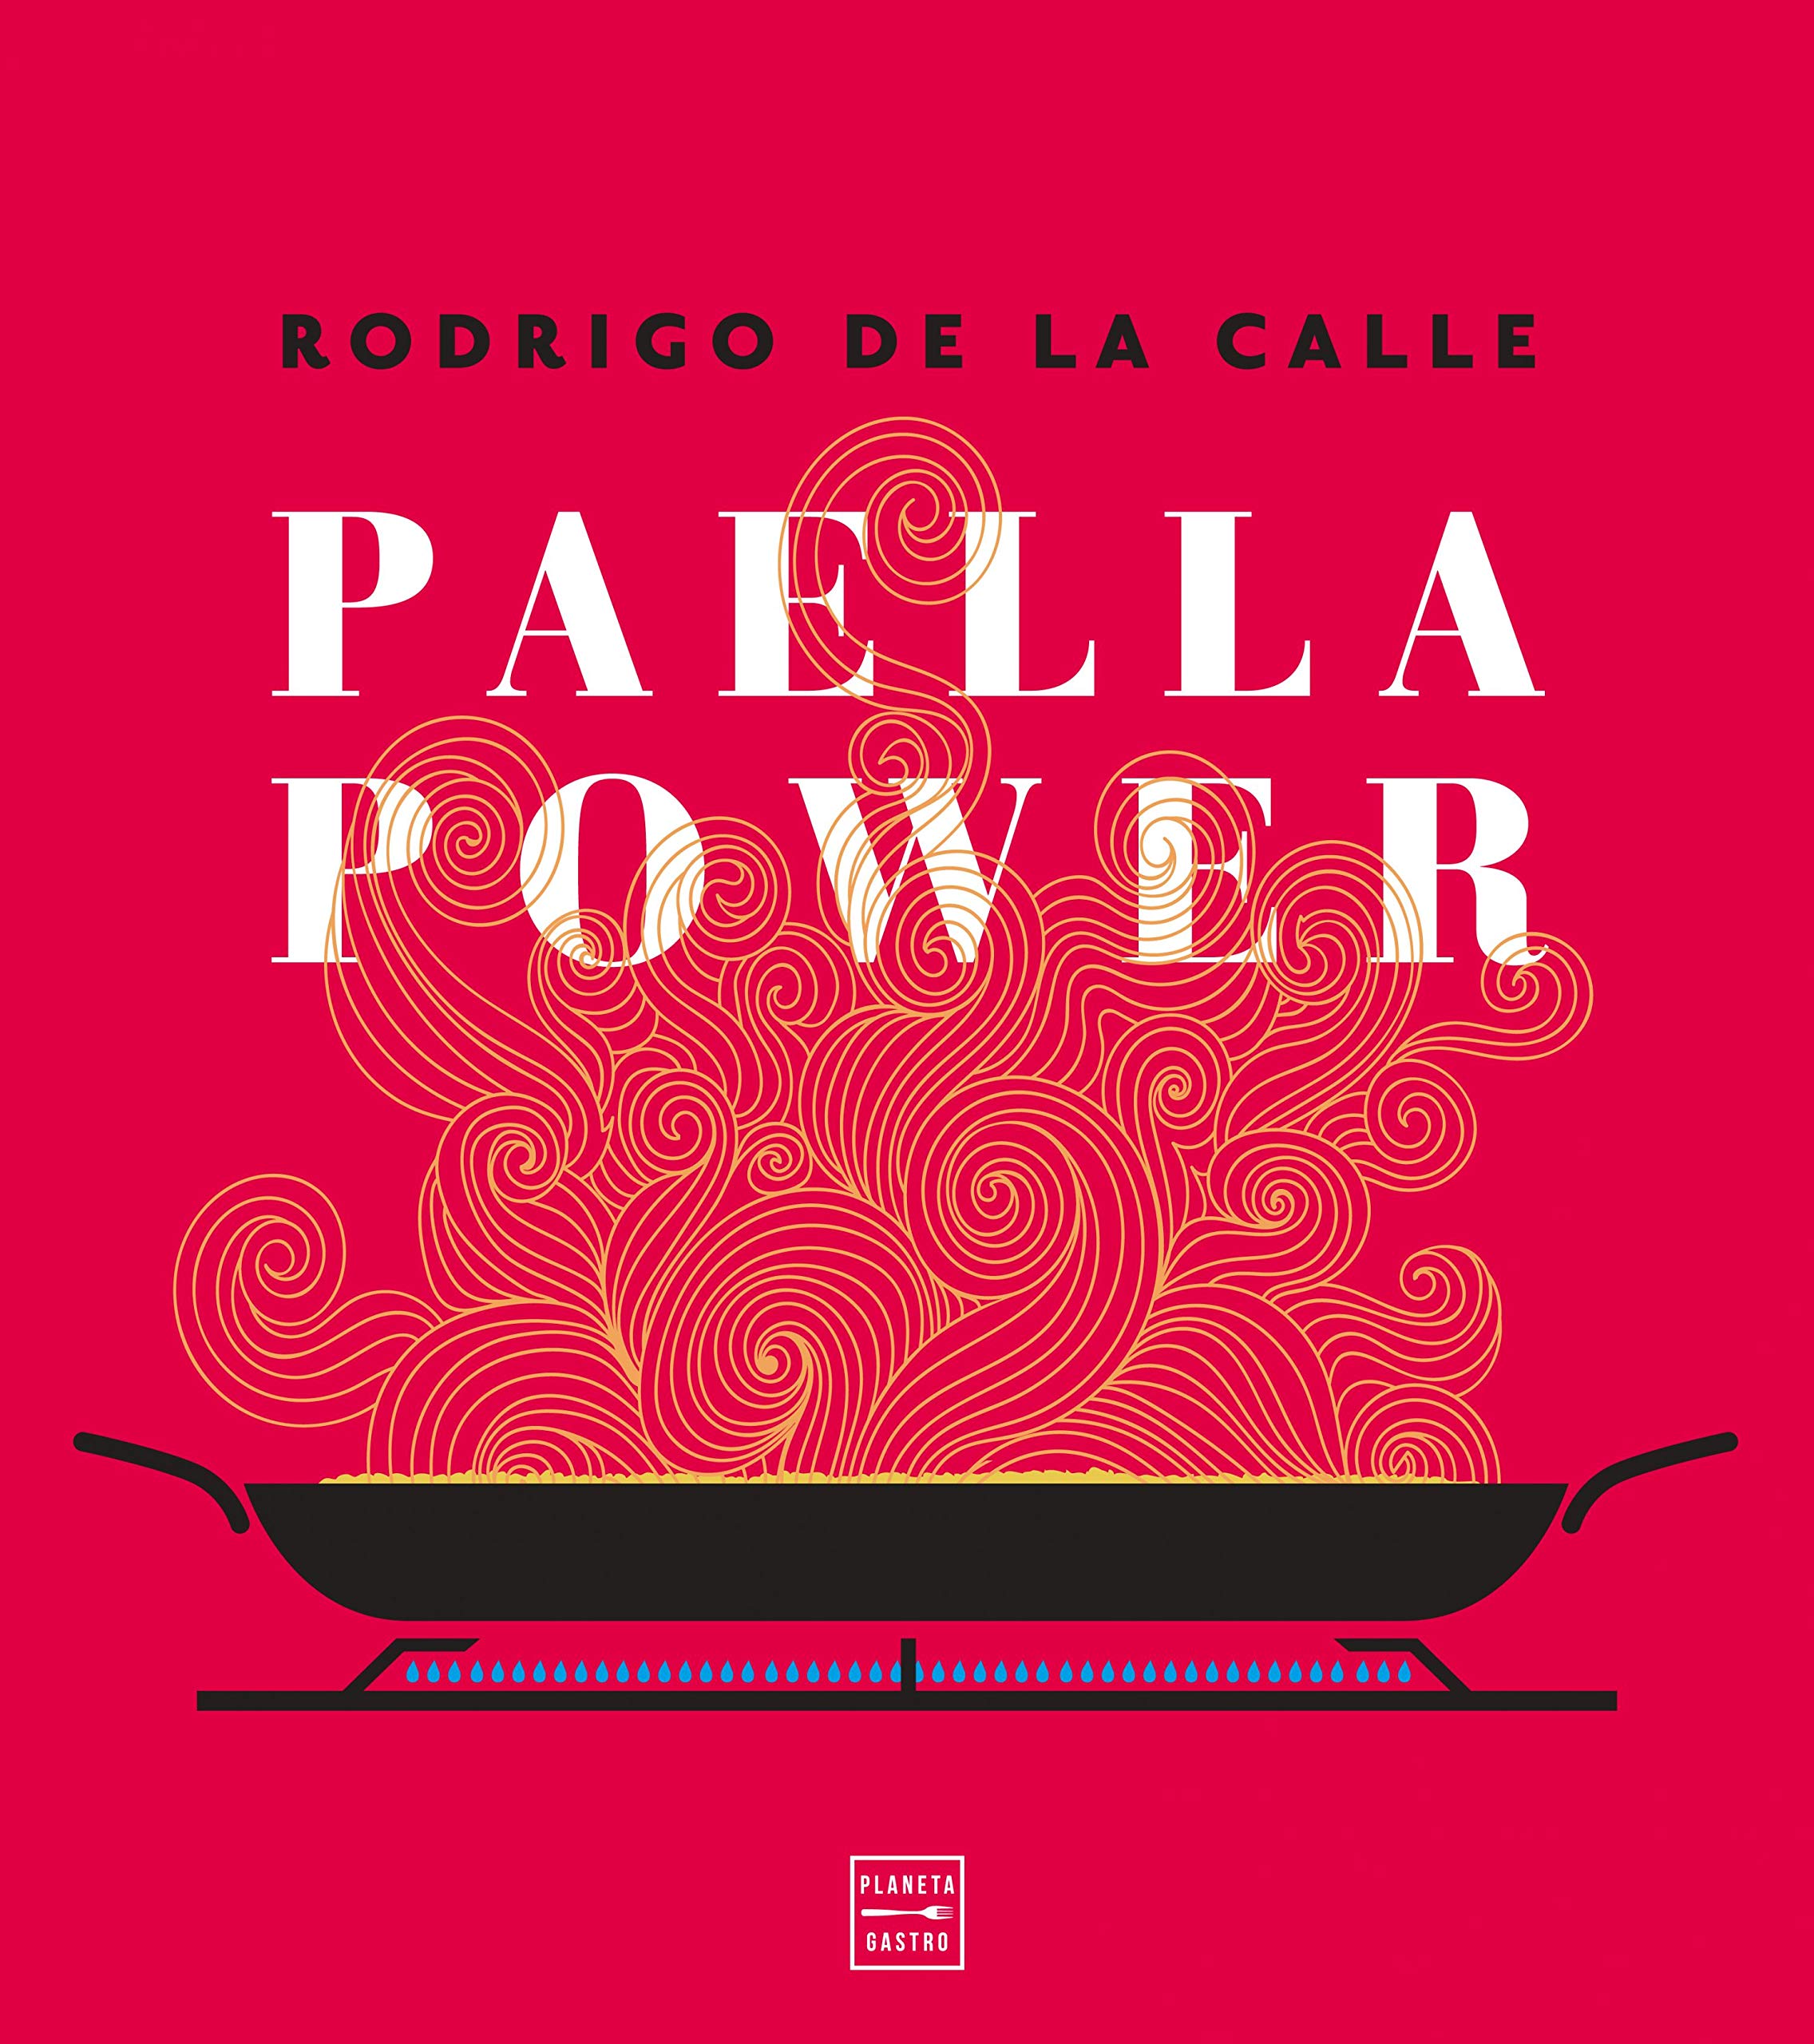 Paella Power, by Rodrigo de la Calle